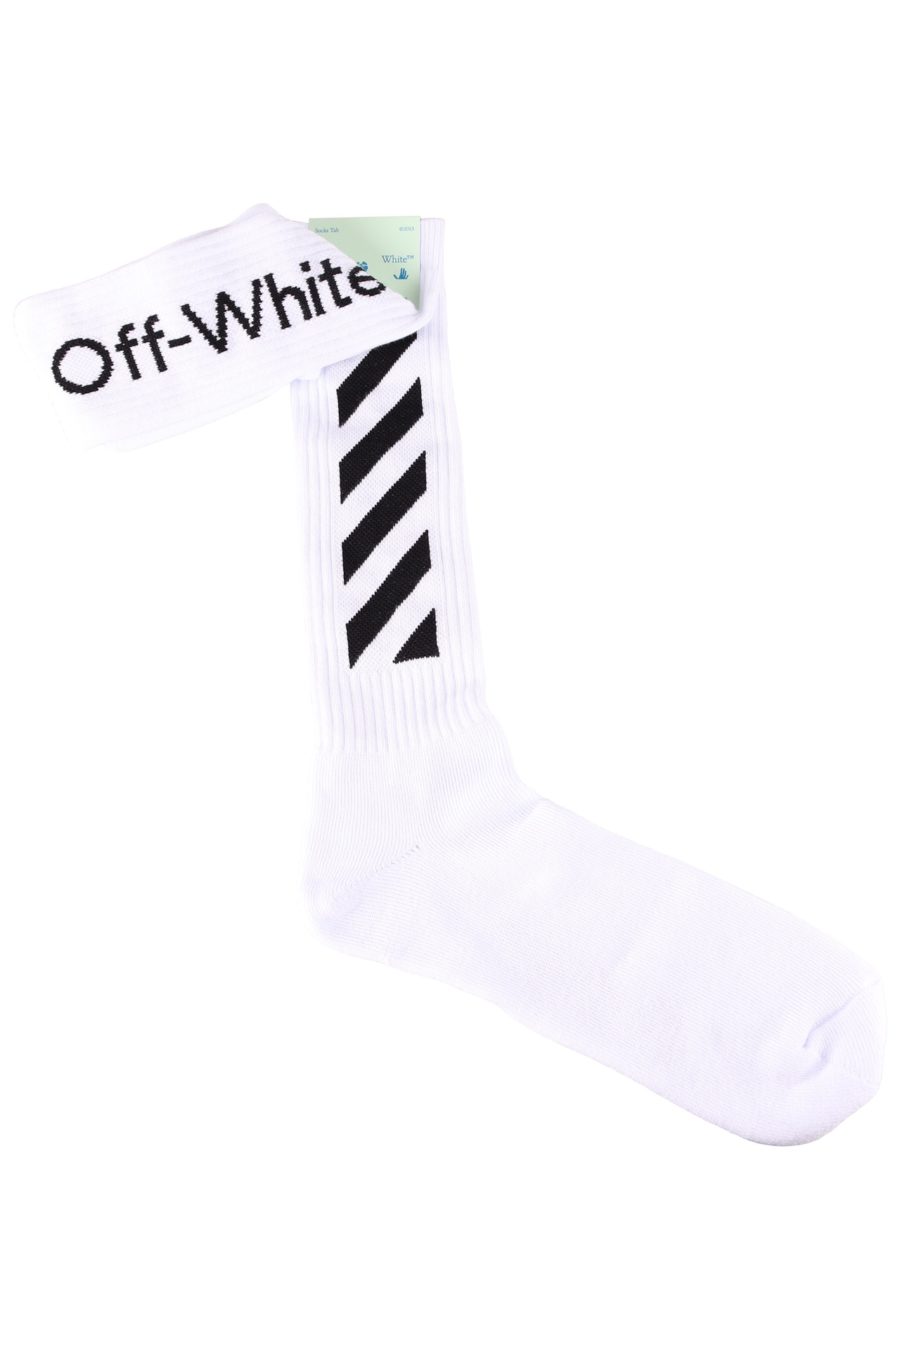 Calcetines Off-White blancos con rayas negras - 5012f6562b6295a29d7c04b036e1f05f14750dab